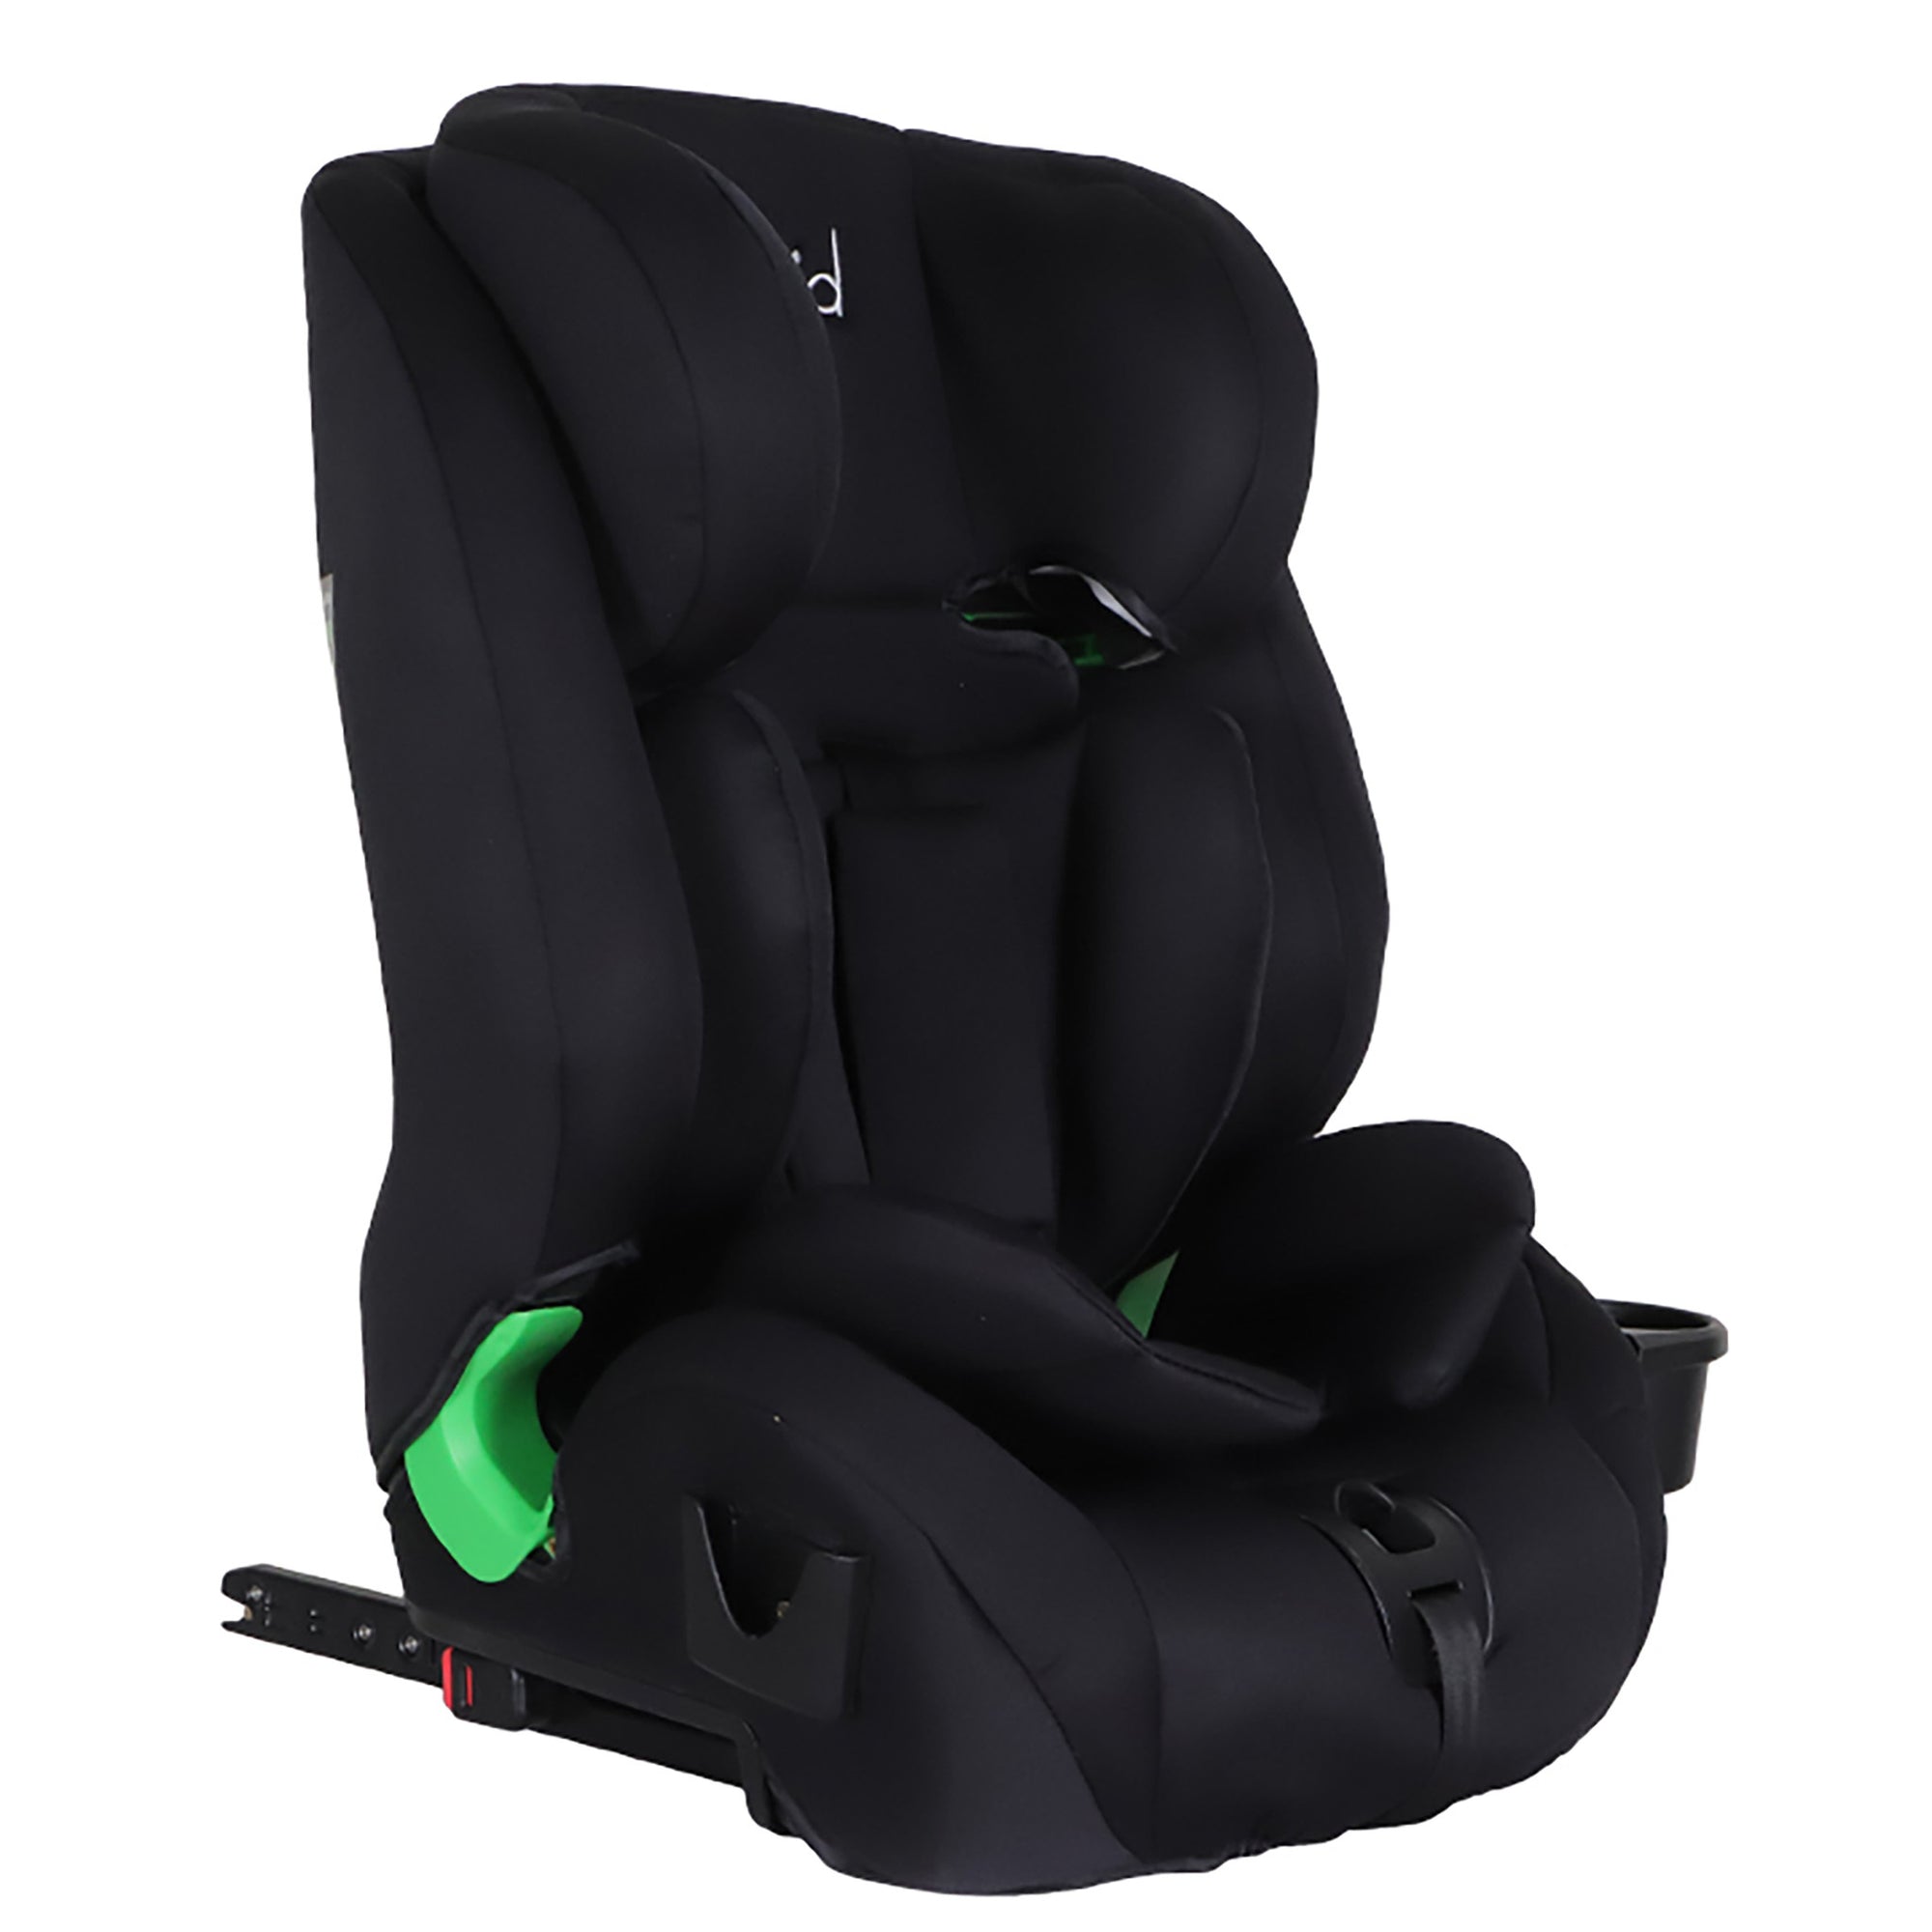 Kikid Car Seat Premium 76-150cm i-Size ISOFIX R129, black